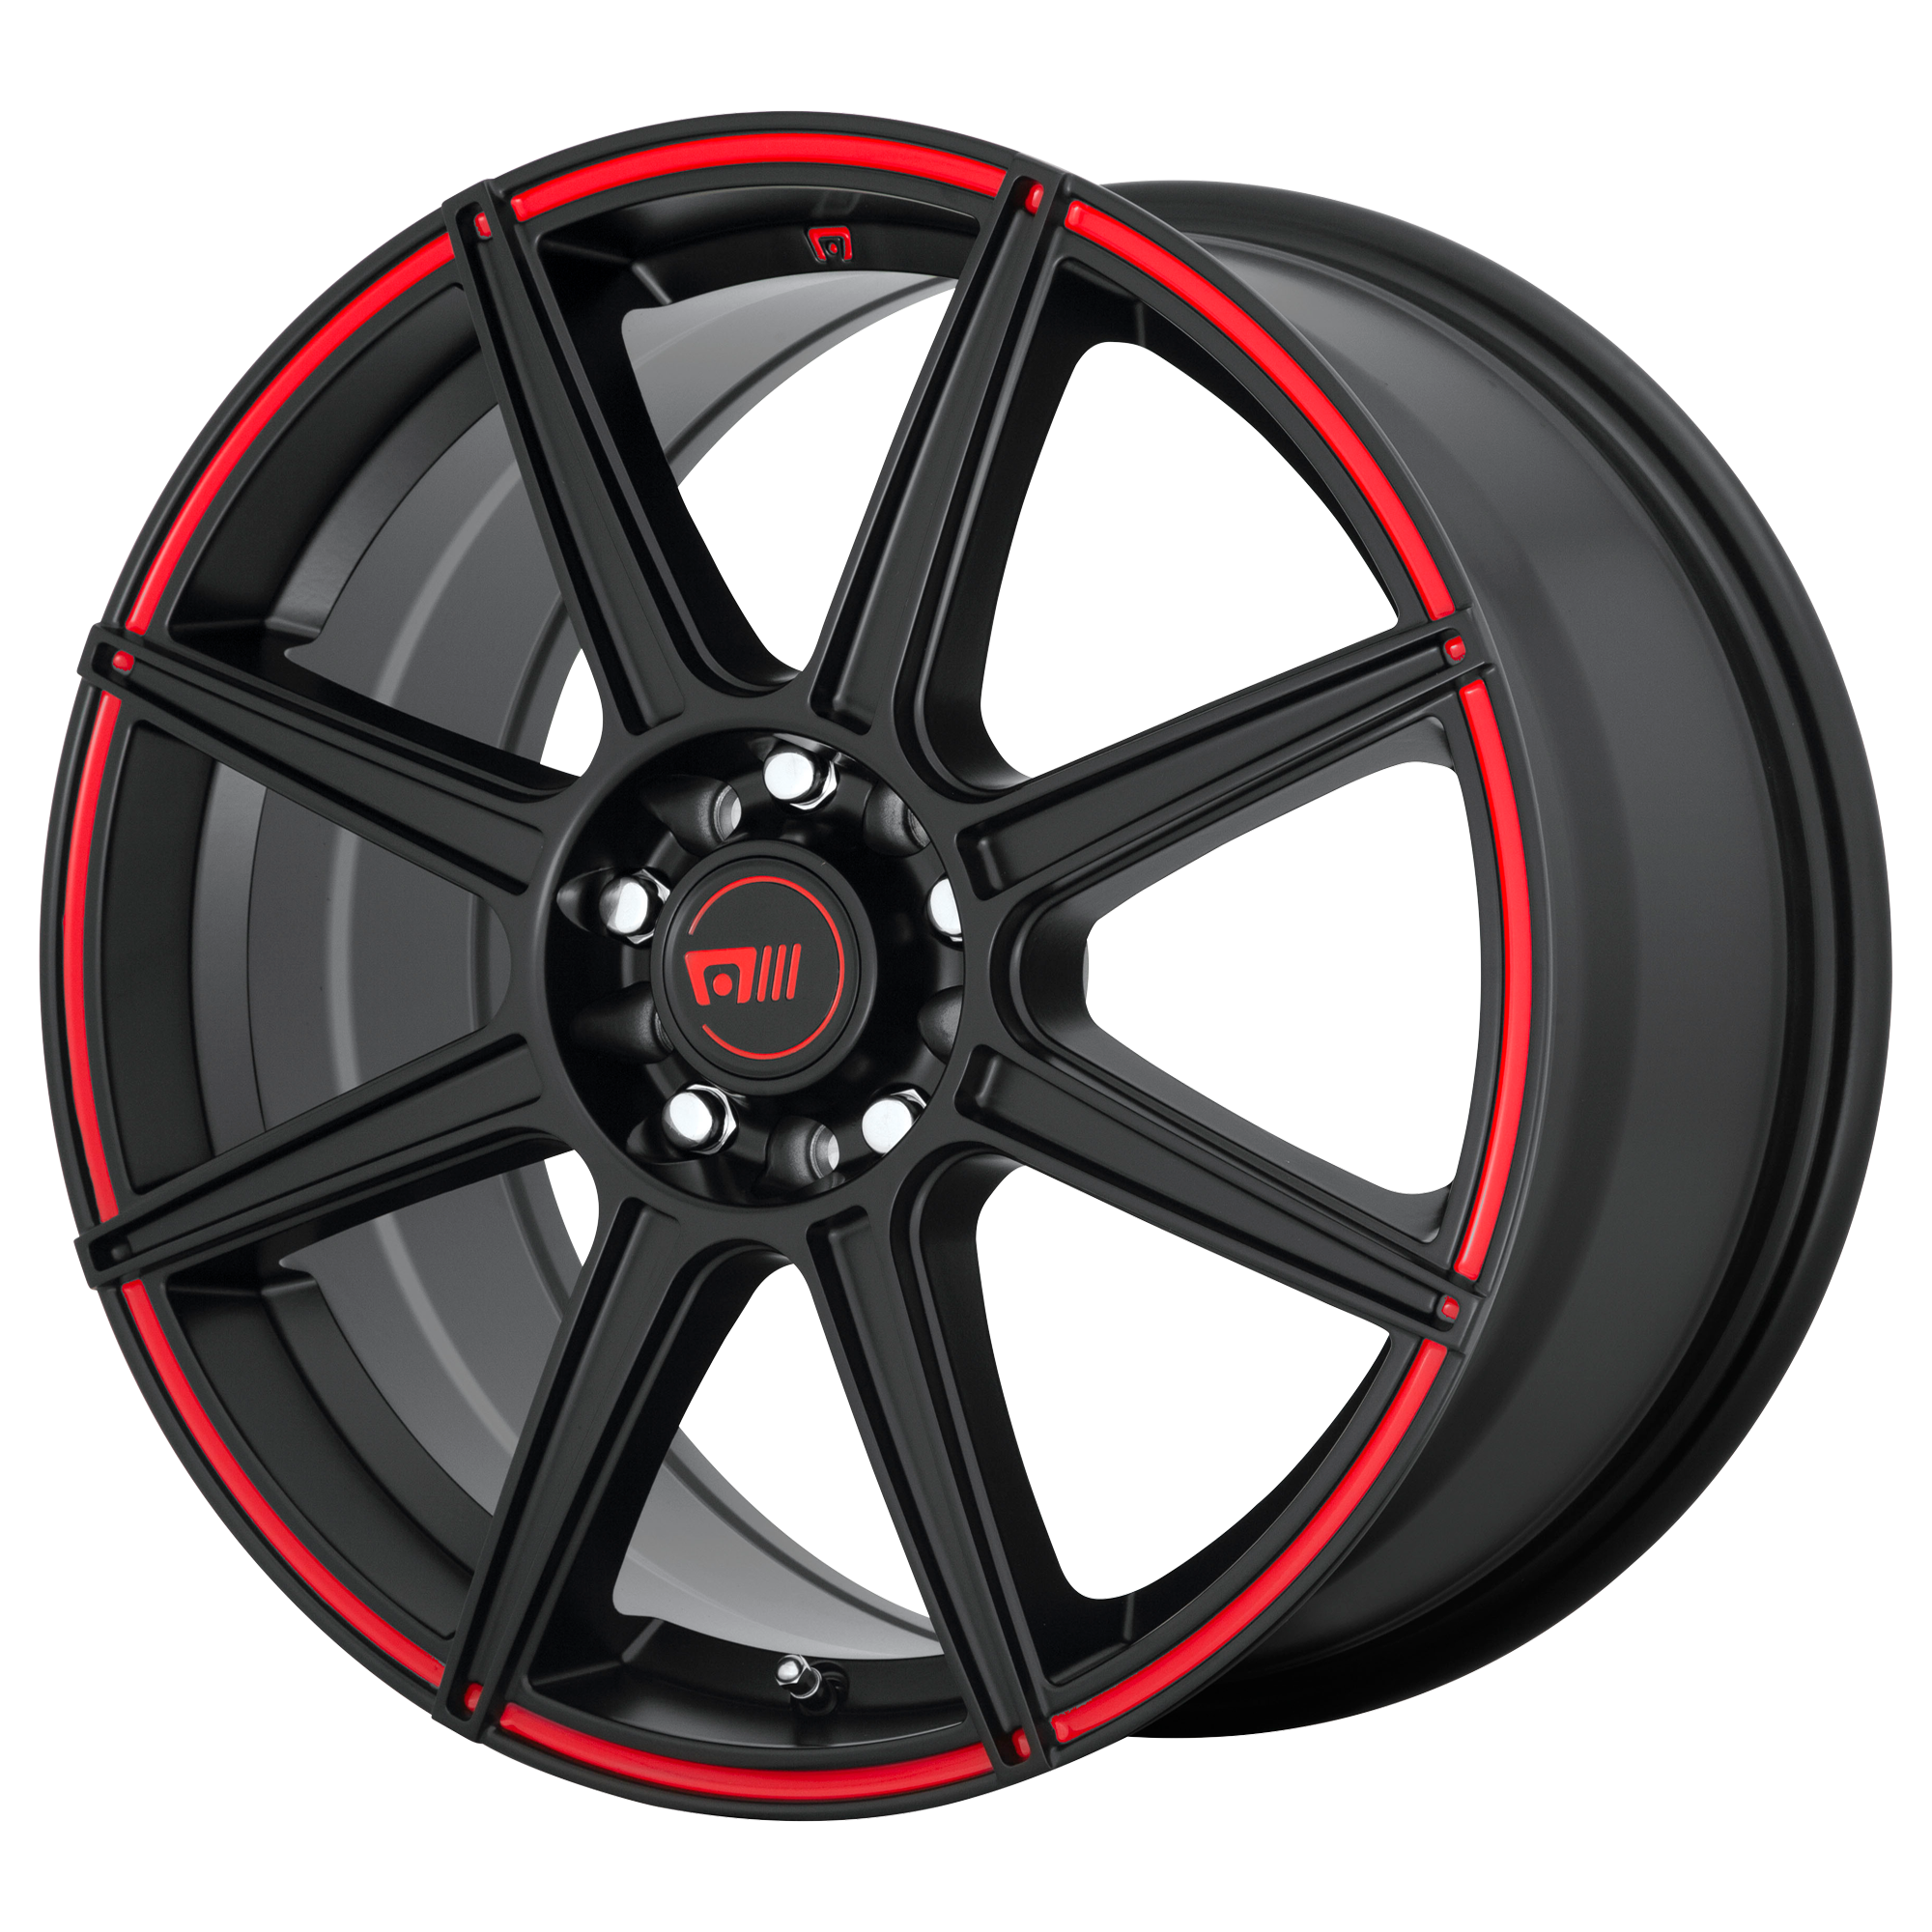 CS8 15x6.5 5x100.00/5x114.30 SATIN BLACK W/ RED STRIPE (40 mm) - Tires and Engine Performance